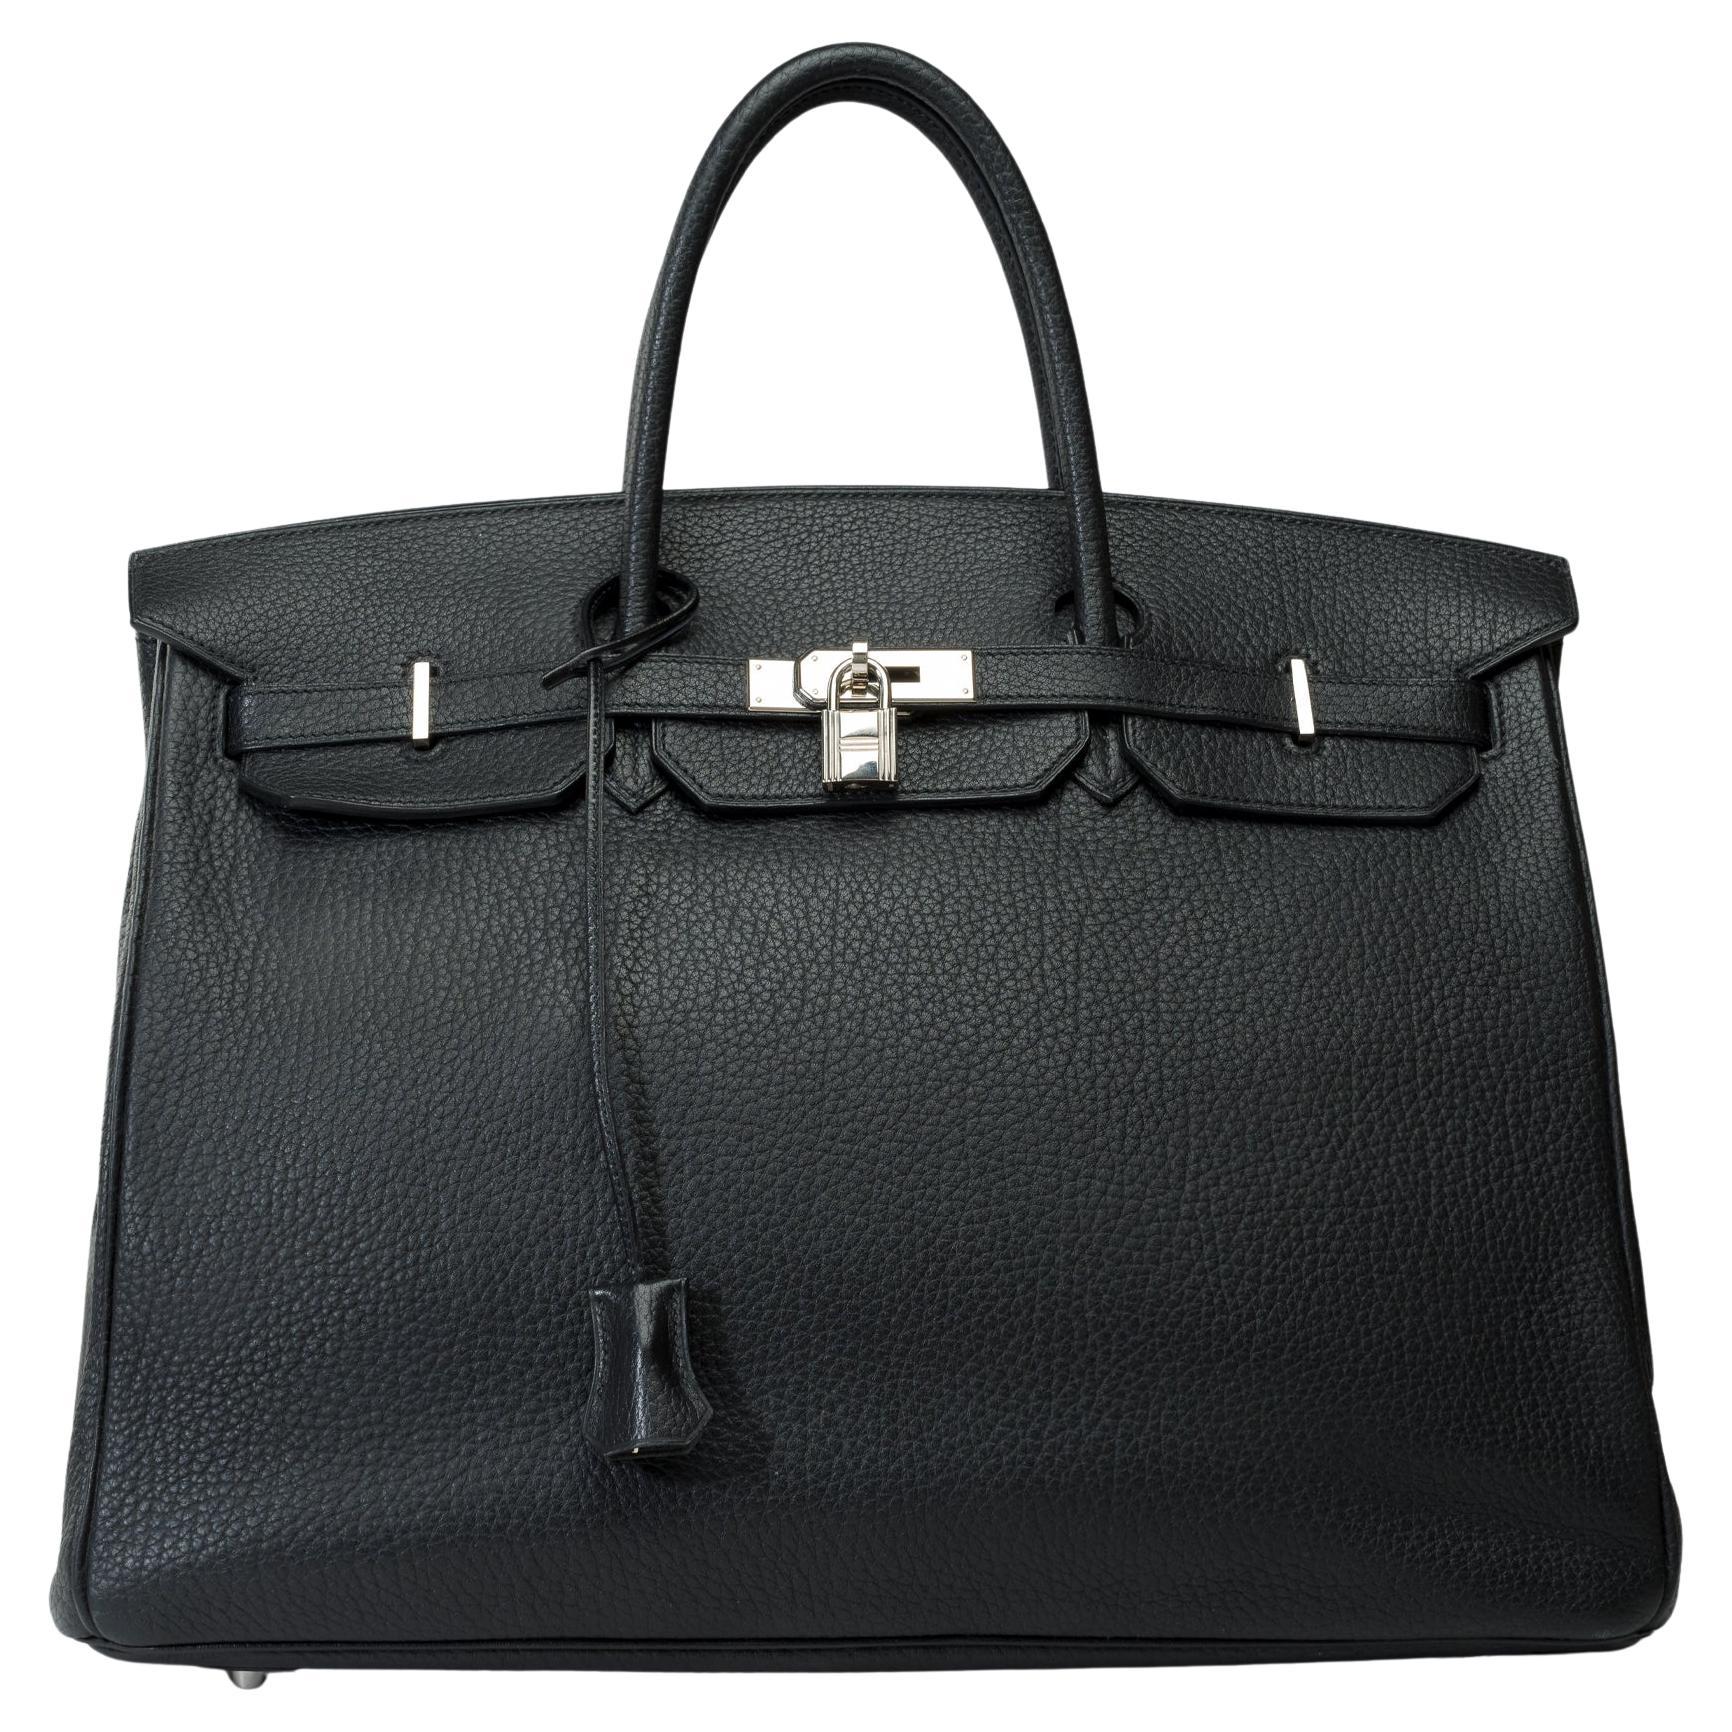 Classy Hermes Birkin 40cm handbag in Black Fjord calf leather, SHW For Sale